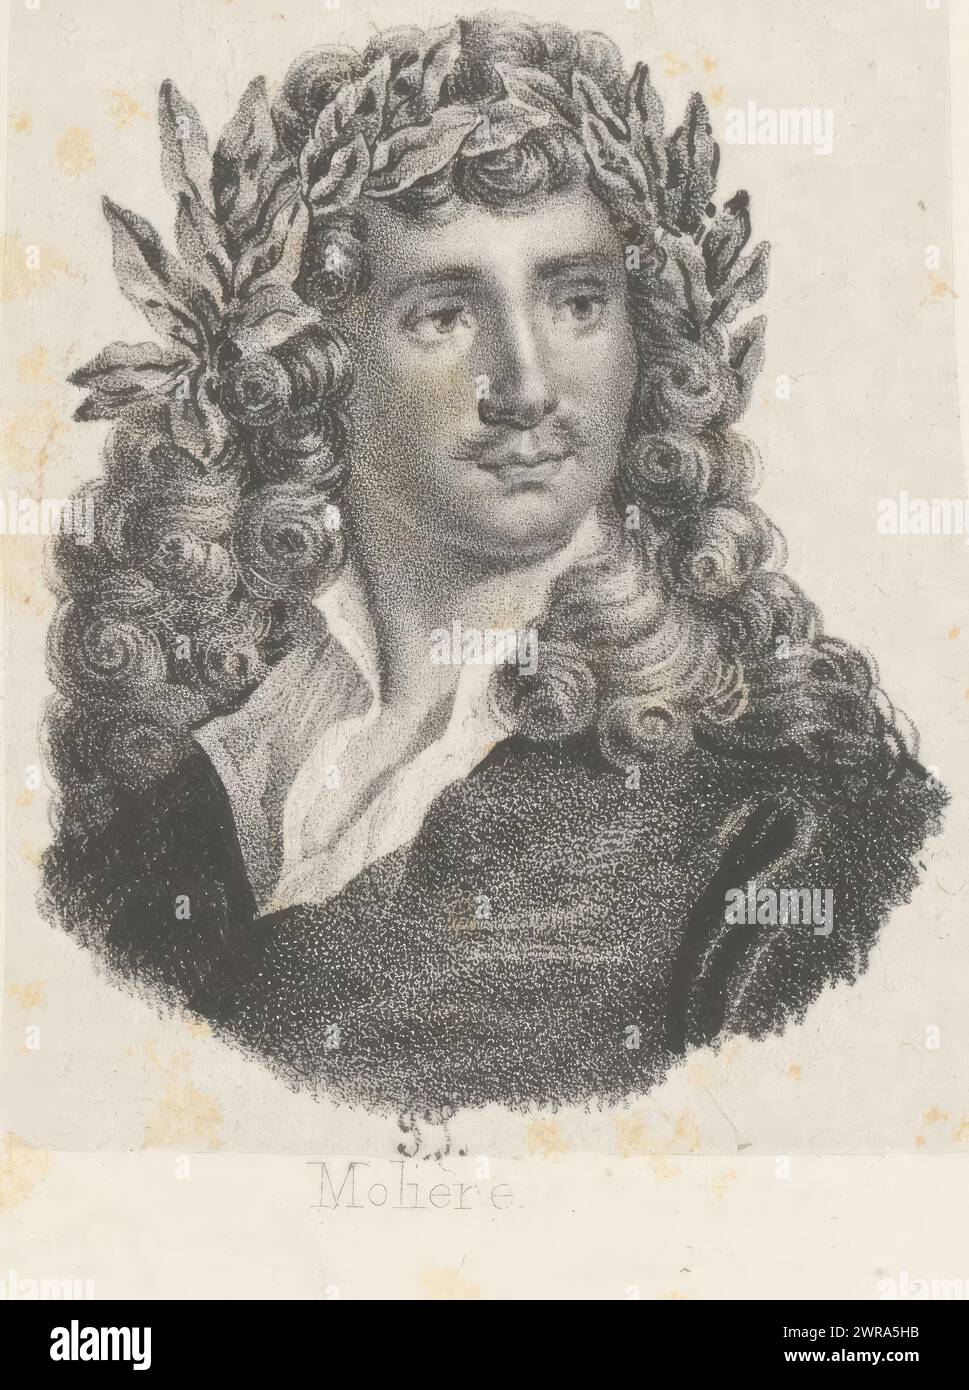 Portrait of Jean Baptiste Poquelin Molière, Molière (title on object), print maker: Joseph Schubert, 1841 - 1885, paper, height 128 mm × width 86 mm, print Stock Photo